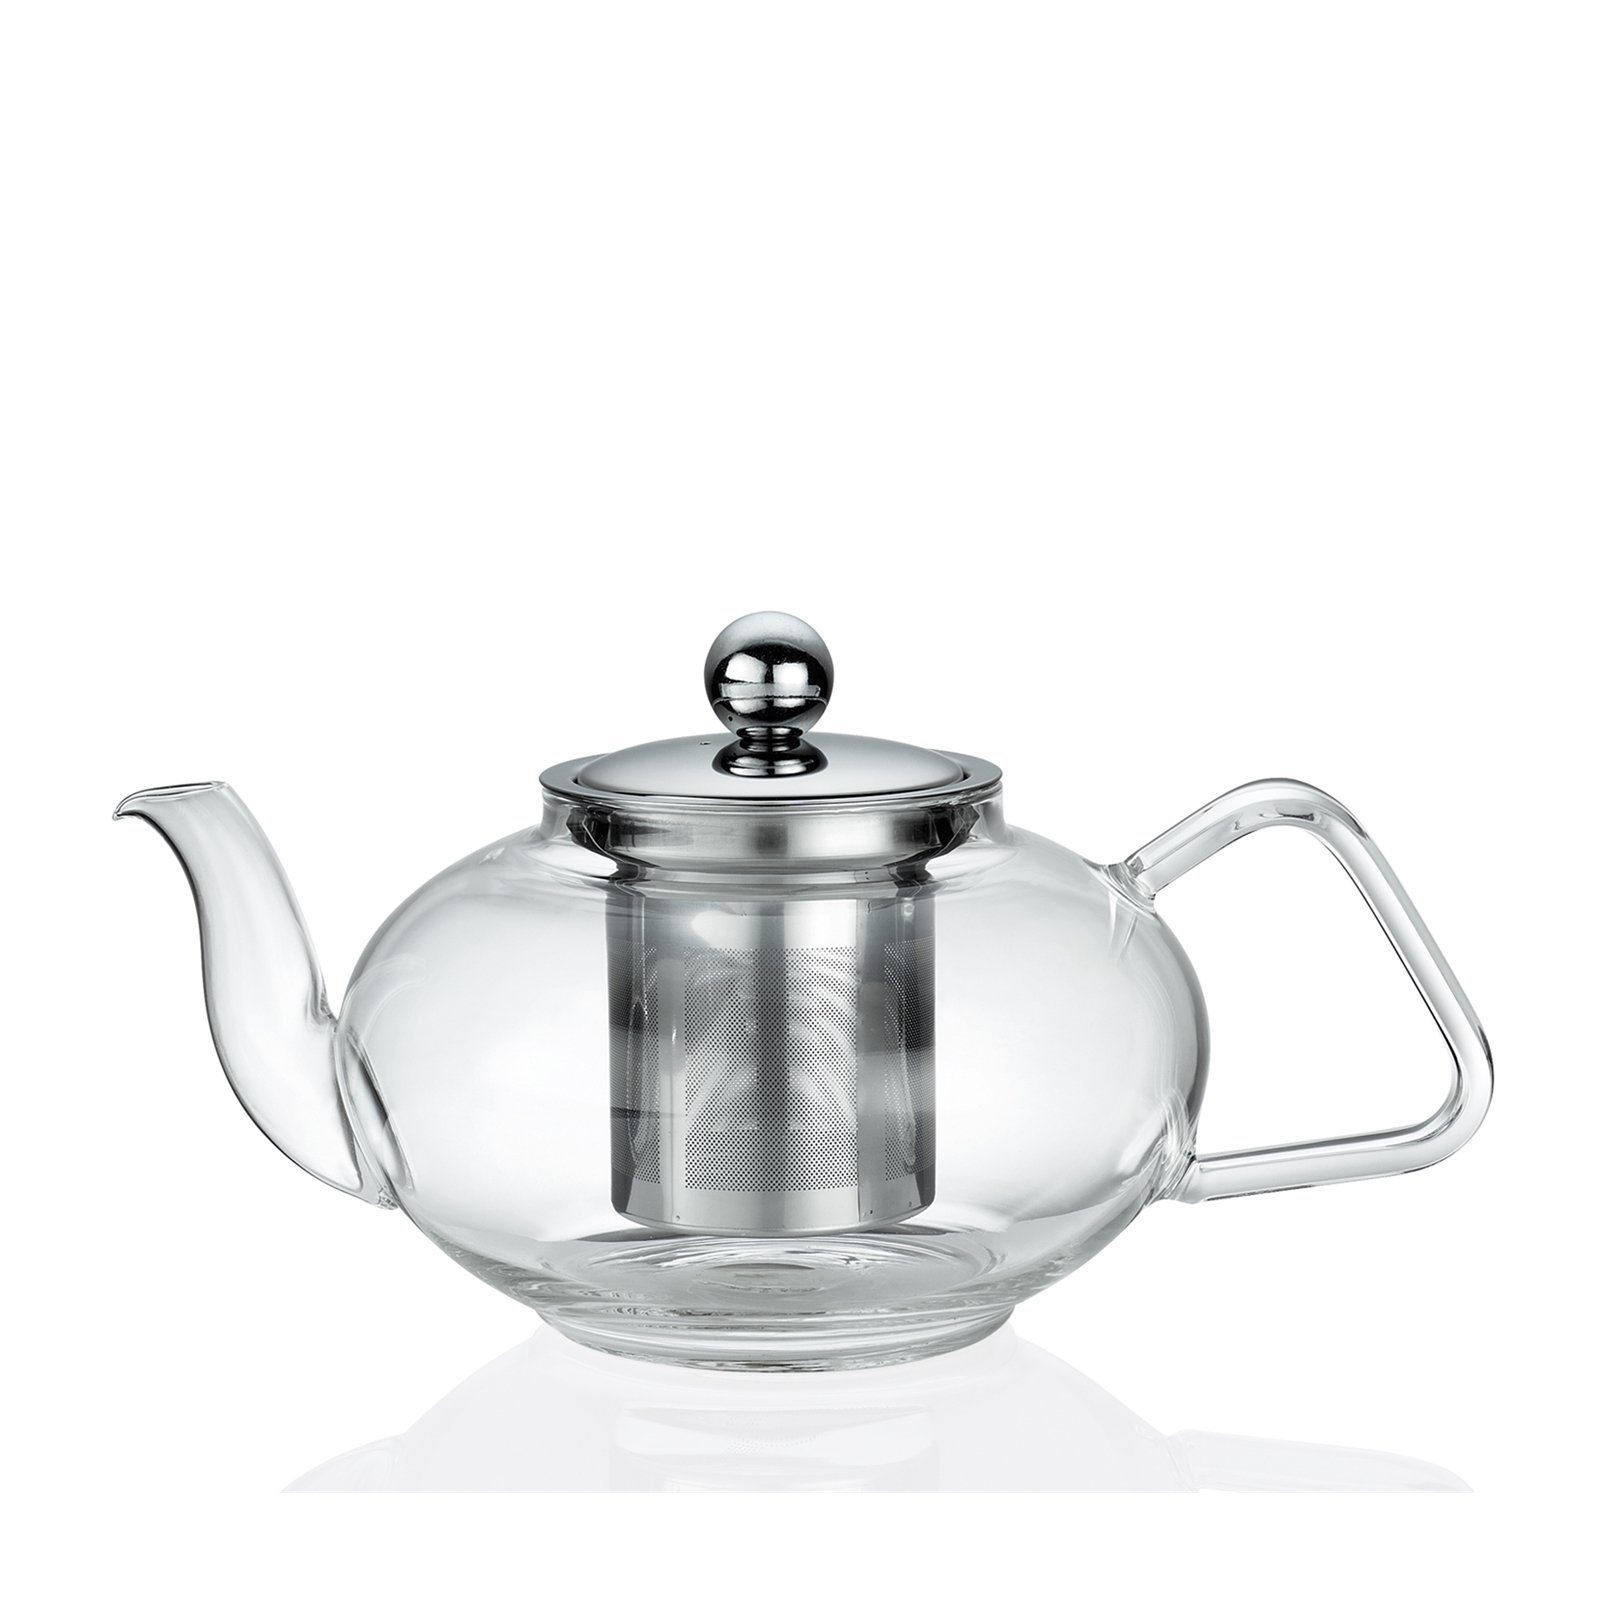 Küchenprofi Teekanne Teekanne Tibet Tea, 0.8 l, (Stück, 1 Teekanne), mit Edelstahlfilter